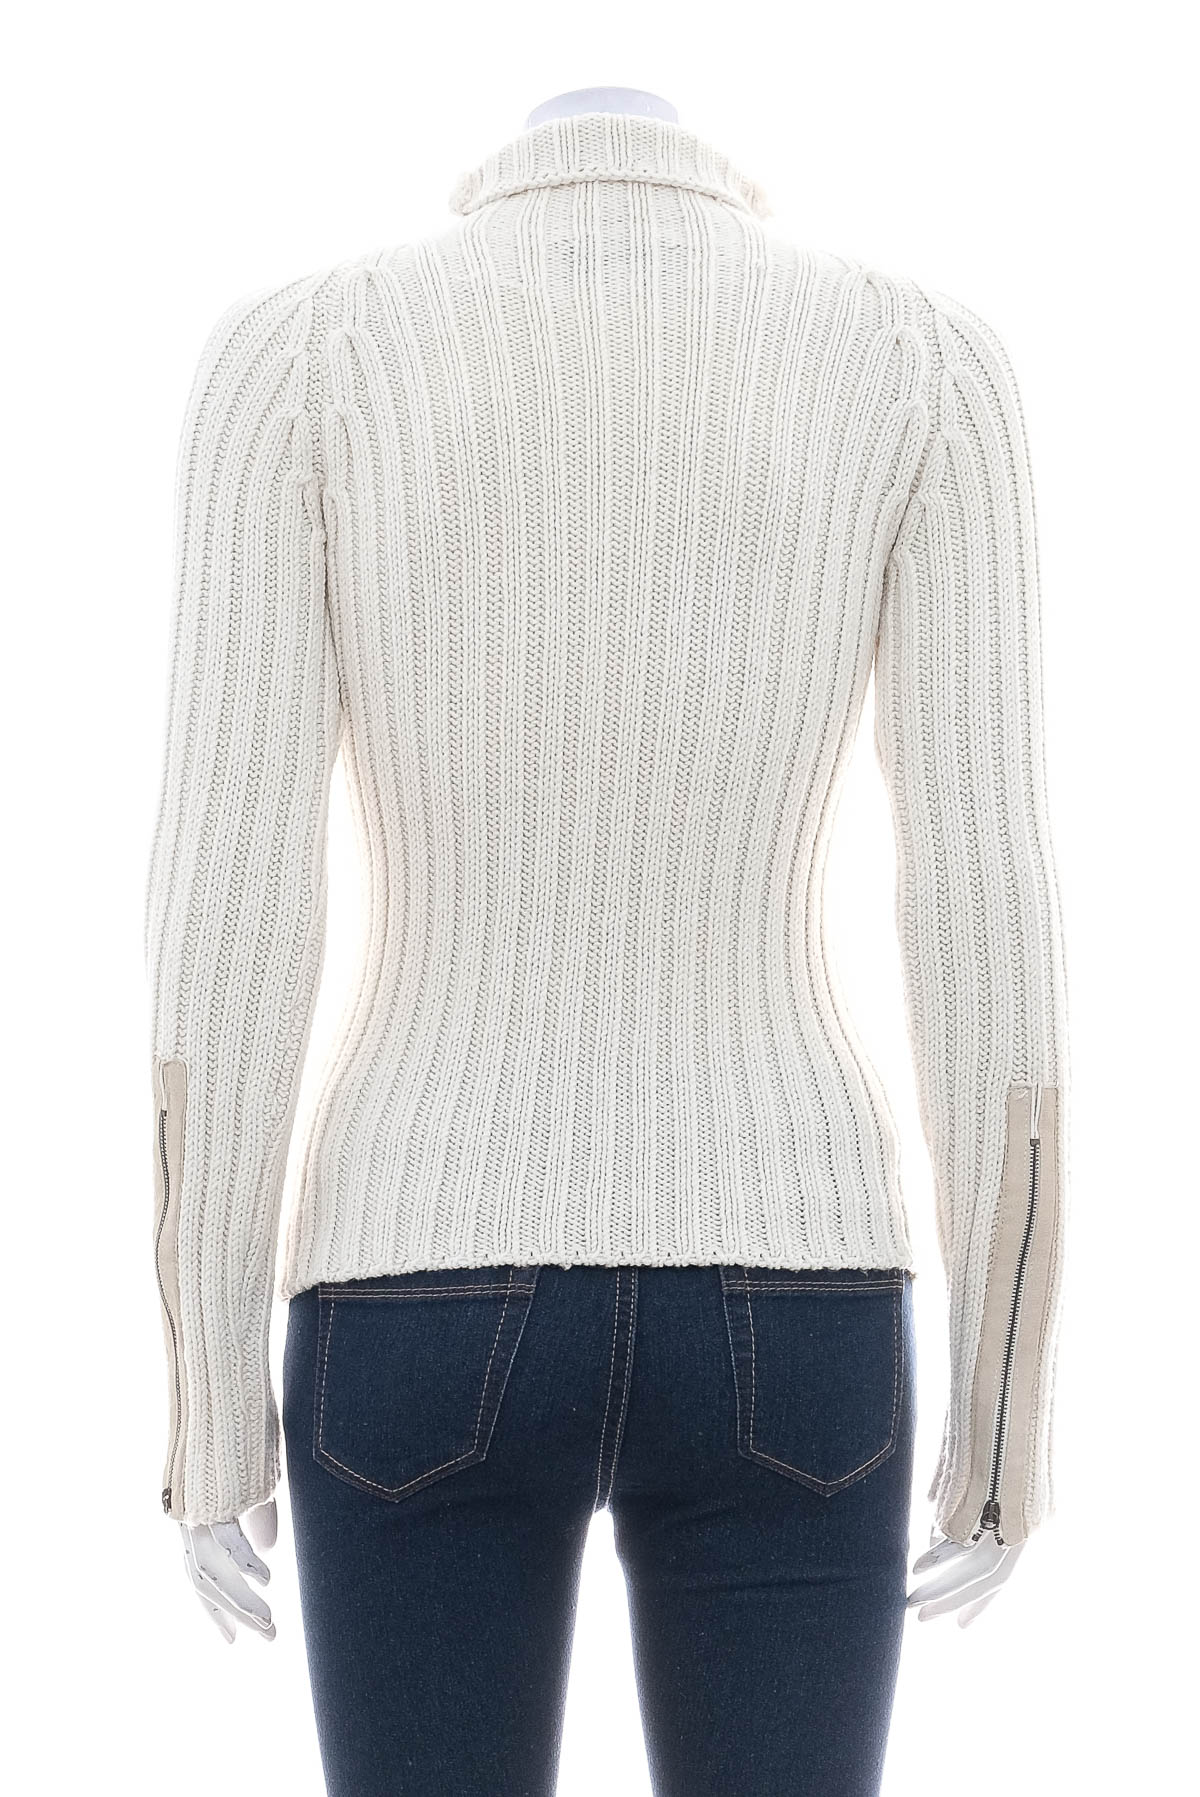 Women's sweater - Patrizia Pepe - 1